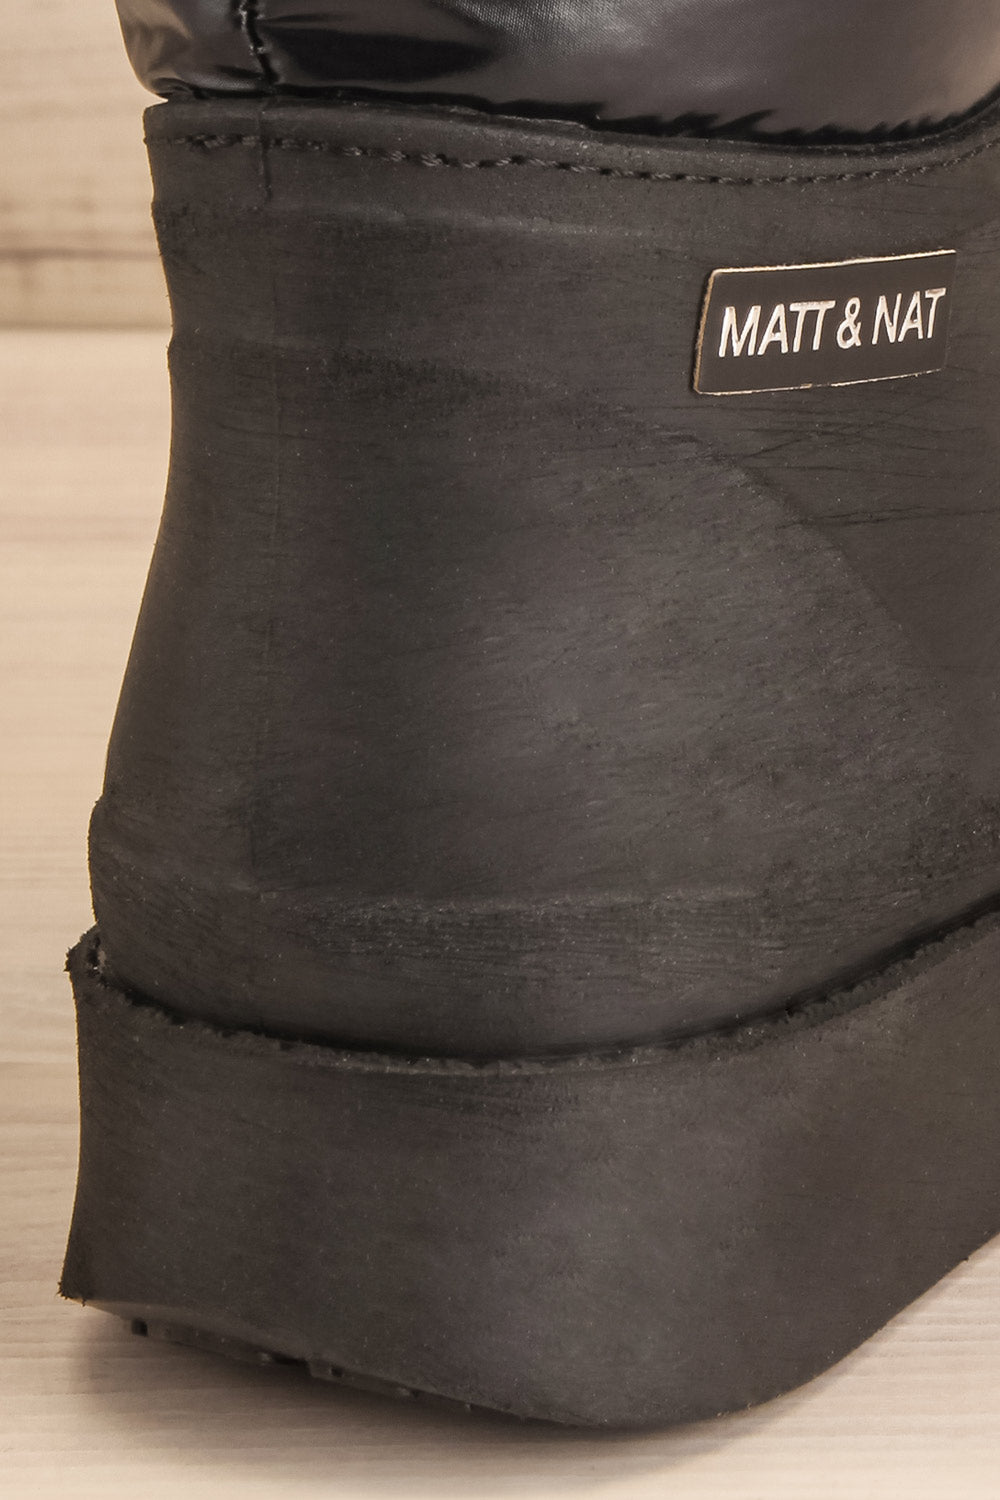 matt and nat rain boots